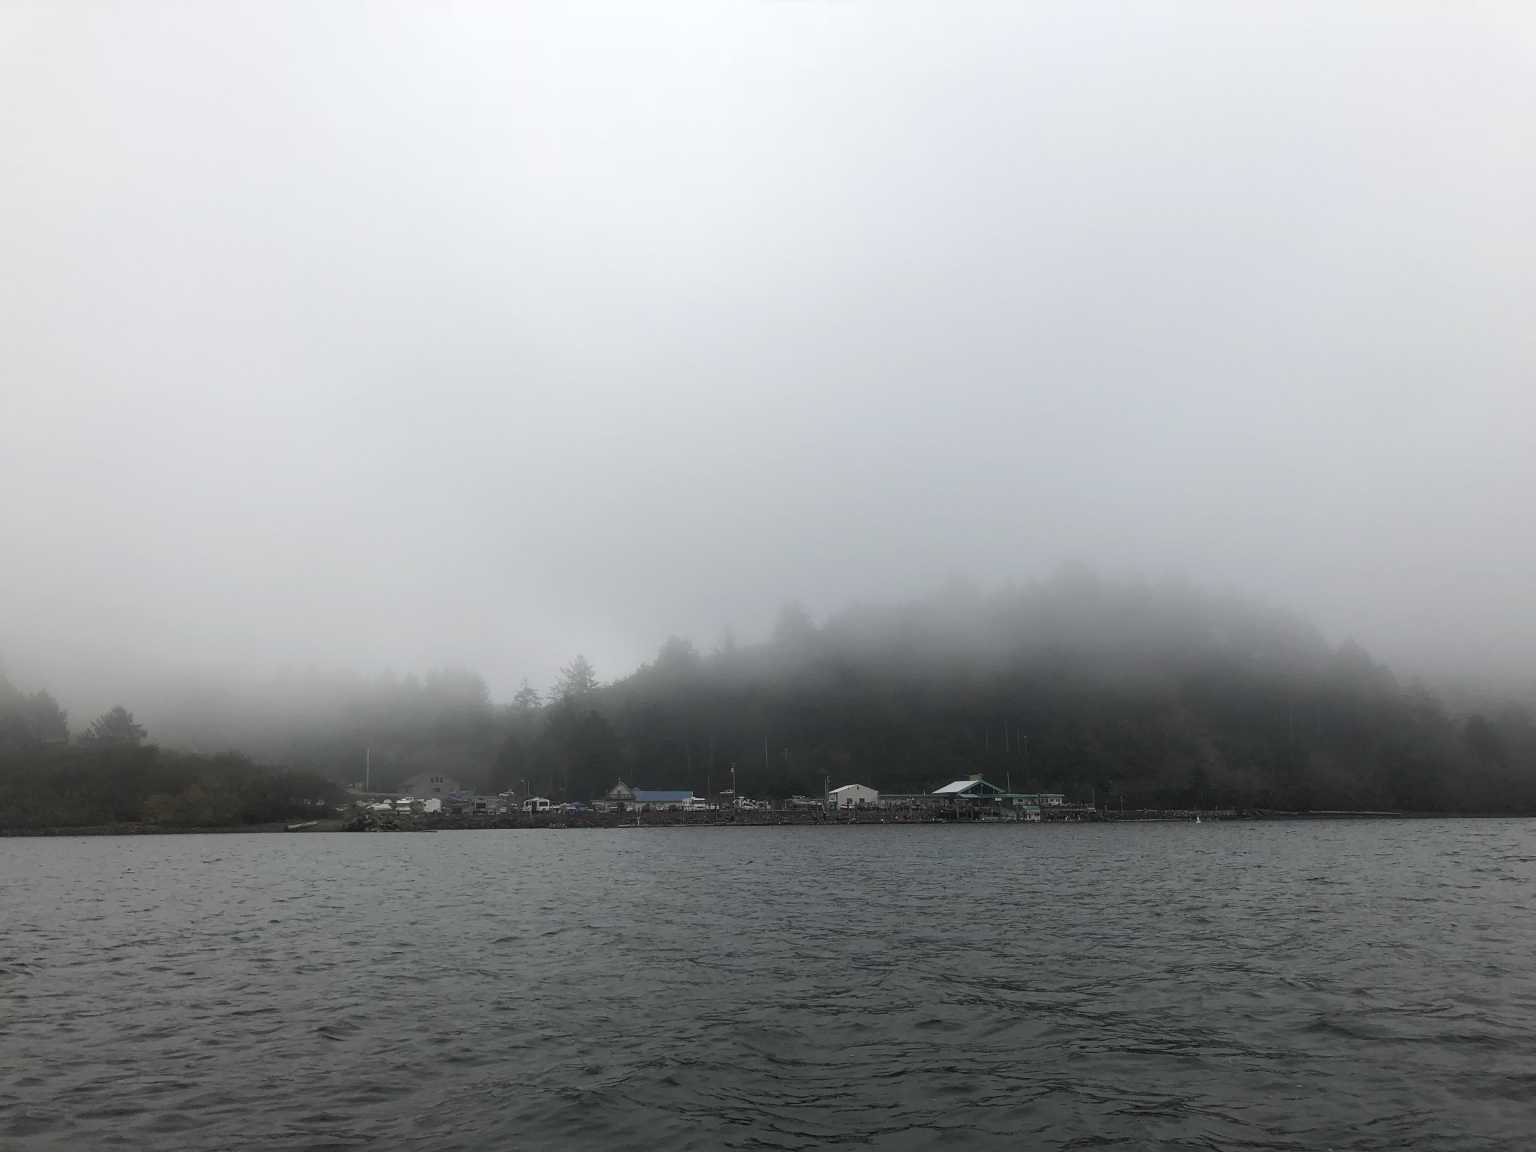 It was a foggy day